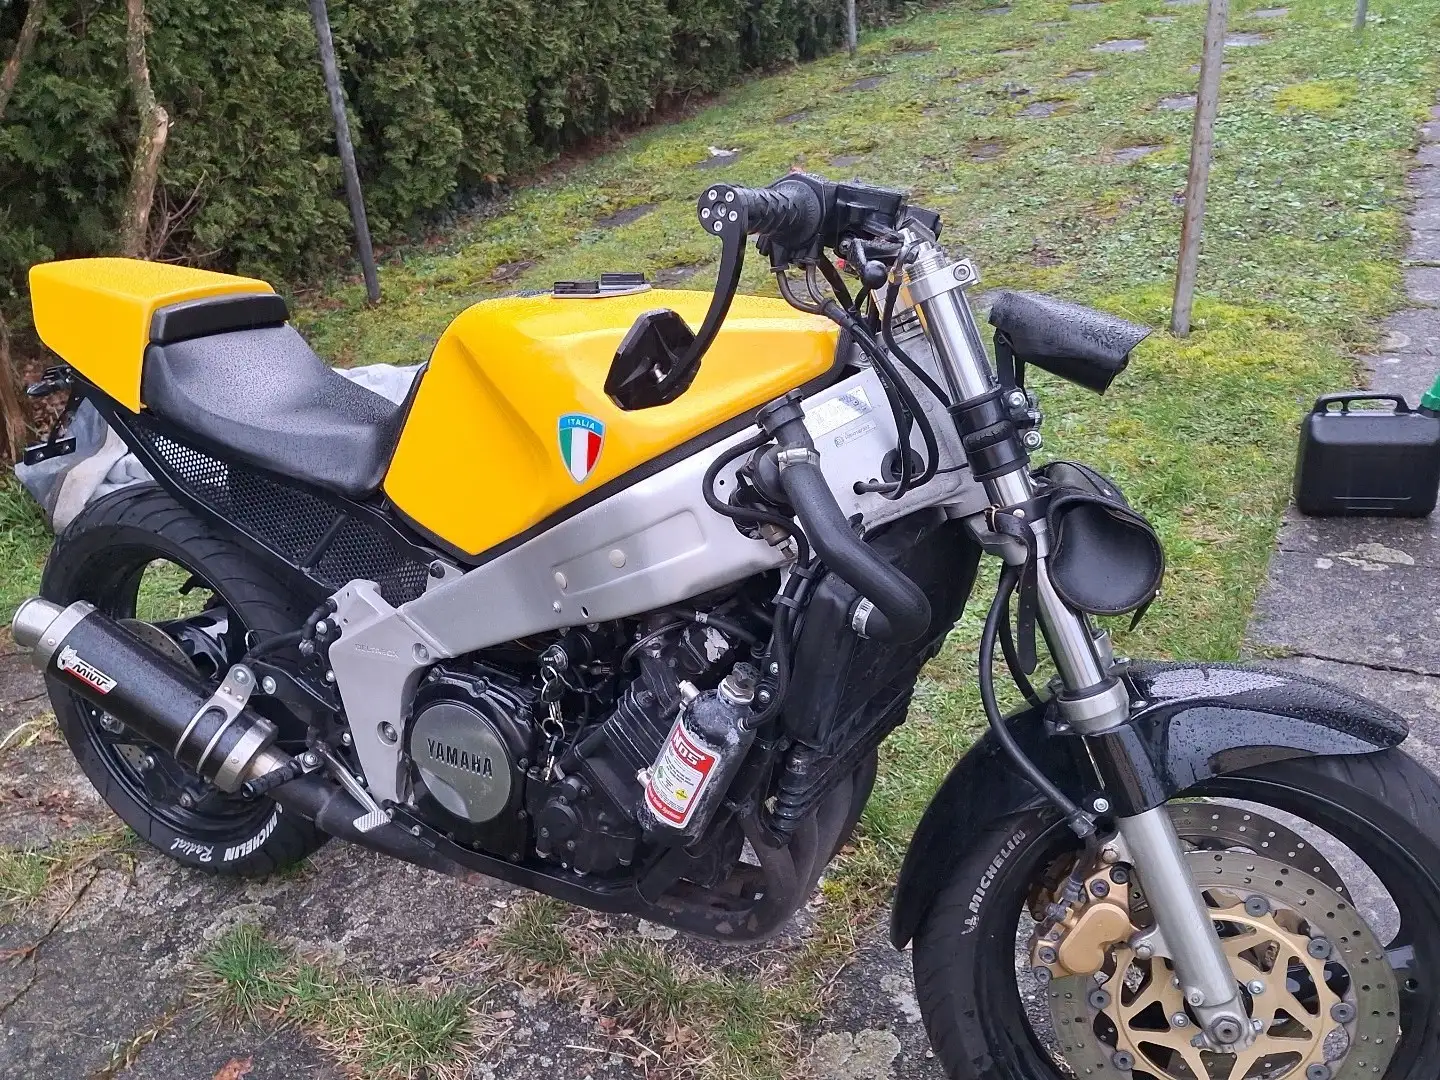 Yamaha FZR 750 Custom, Naked bike. Yellow - 2